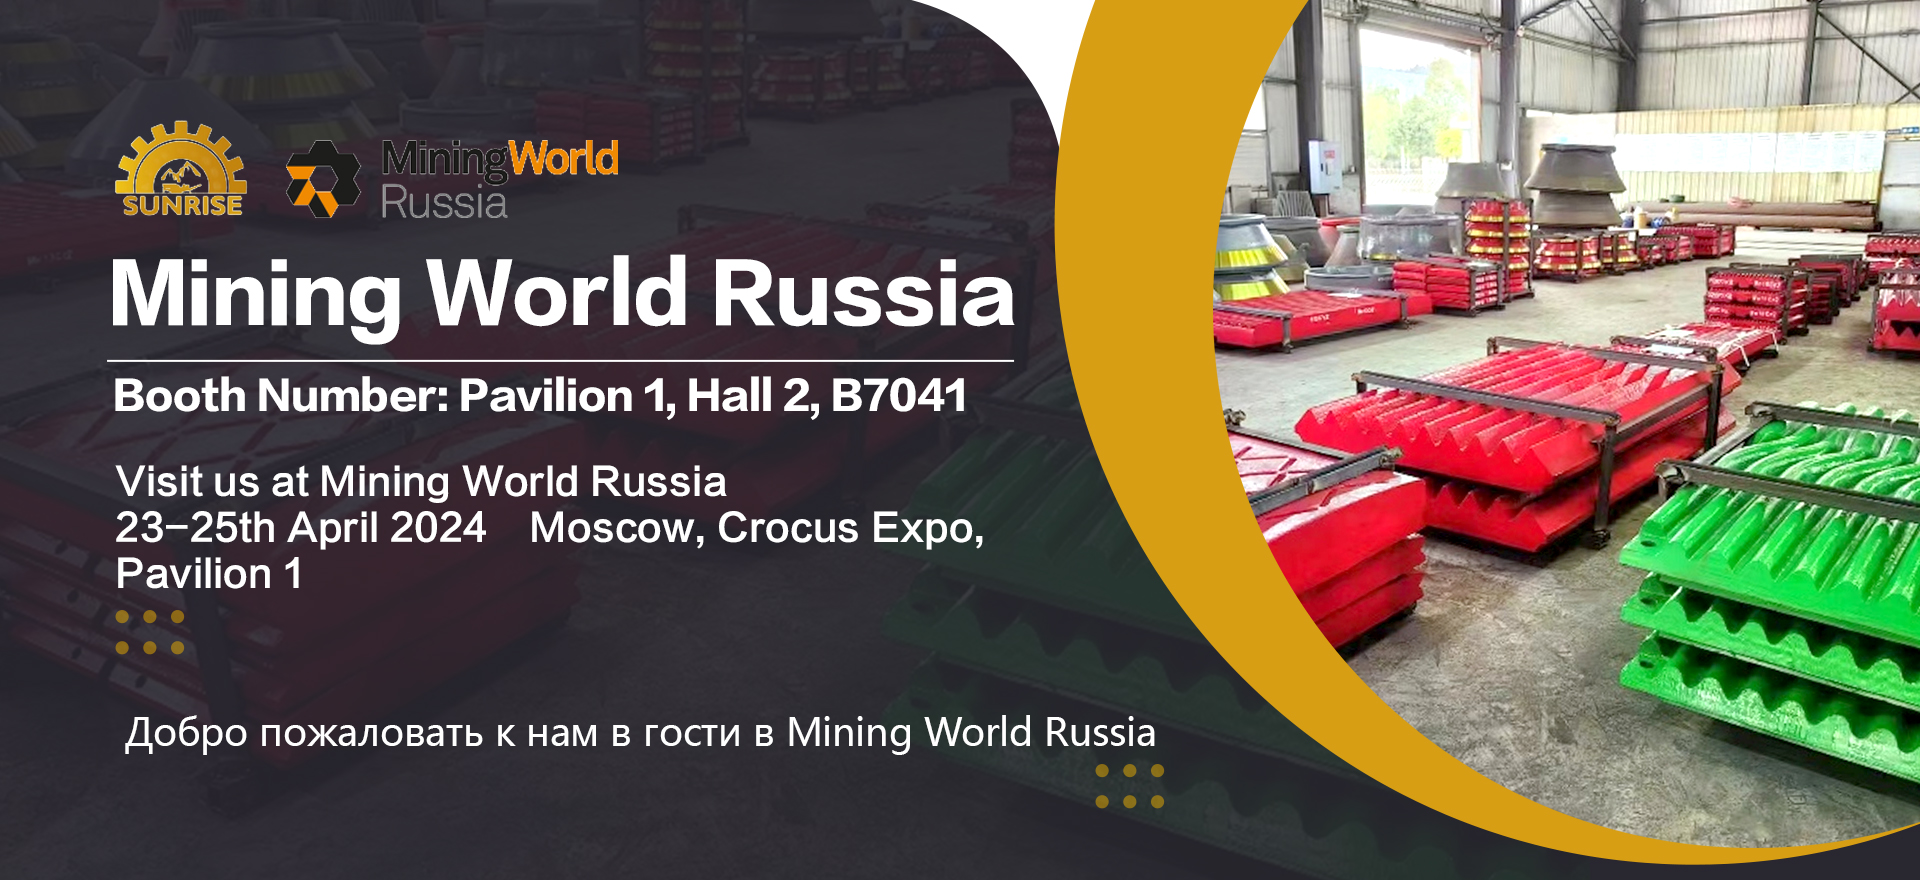 Sunrise Mining World Rusko